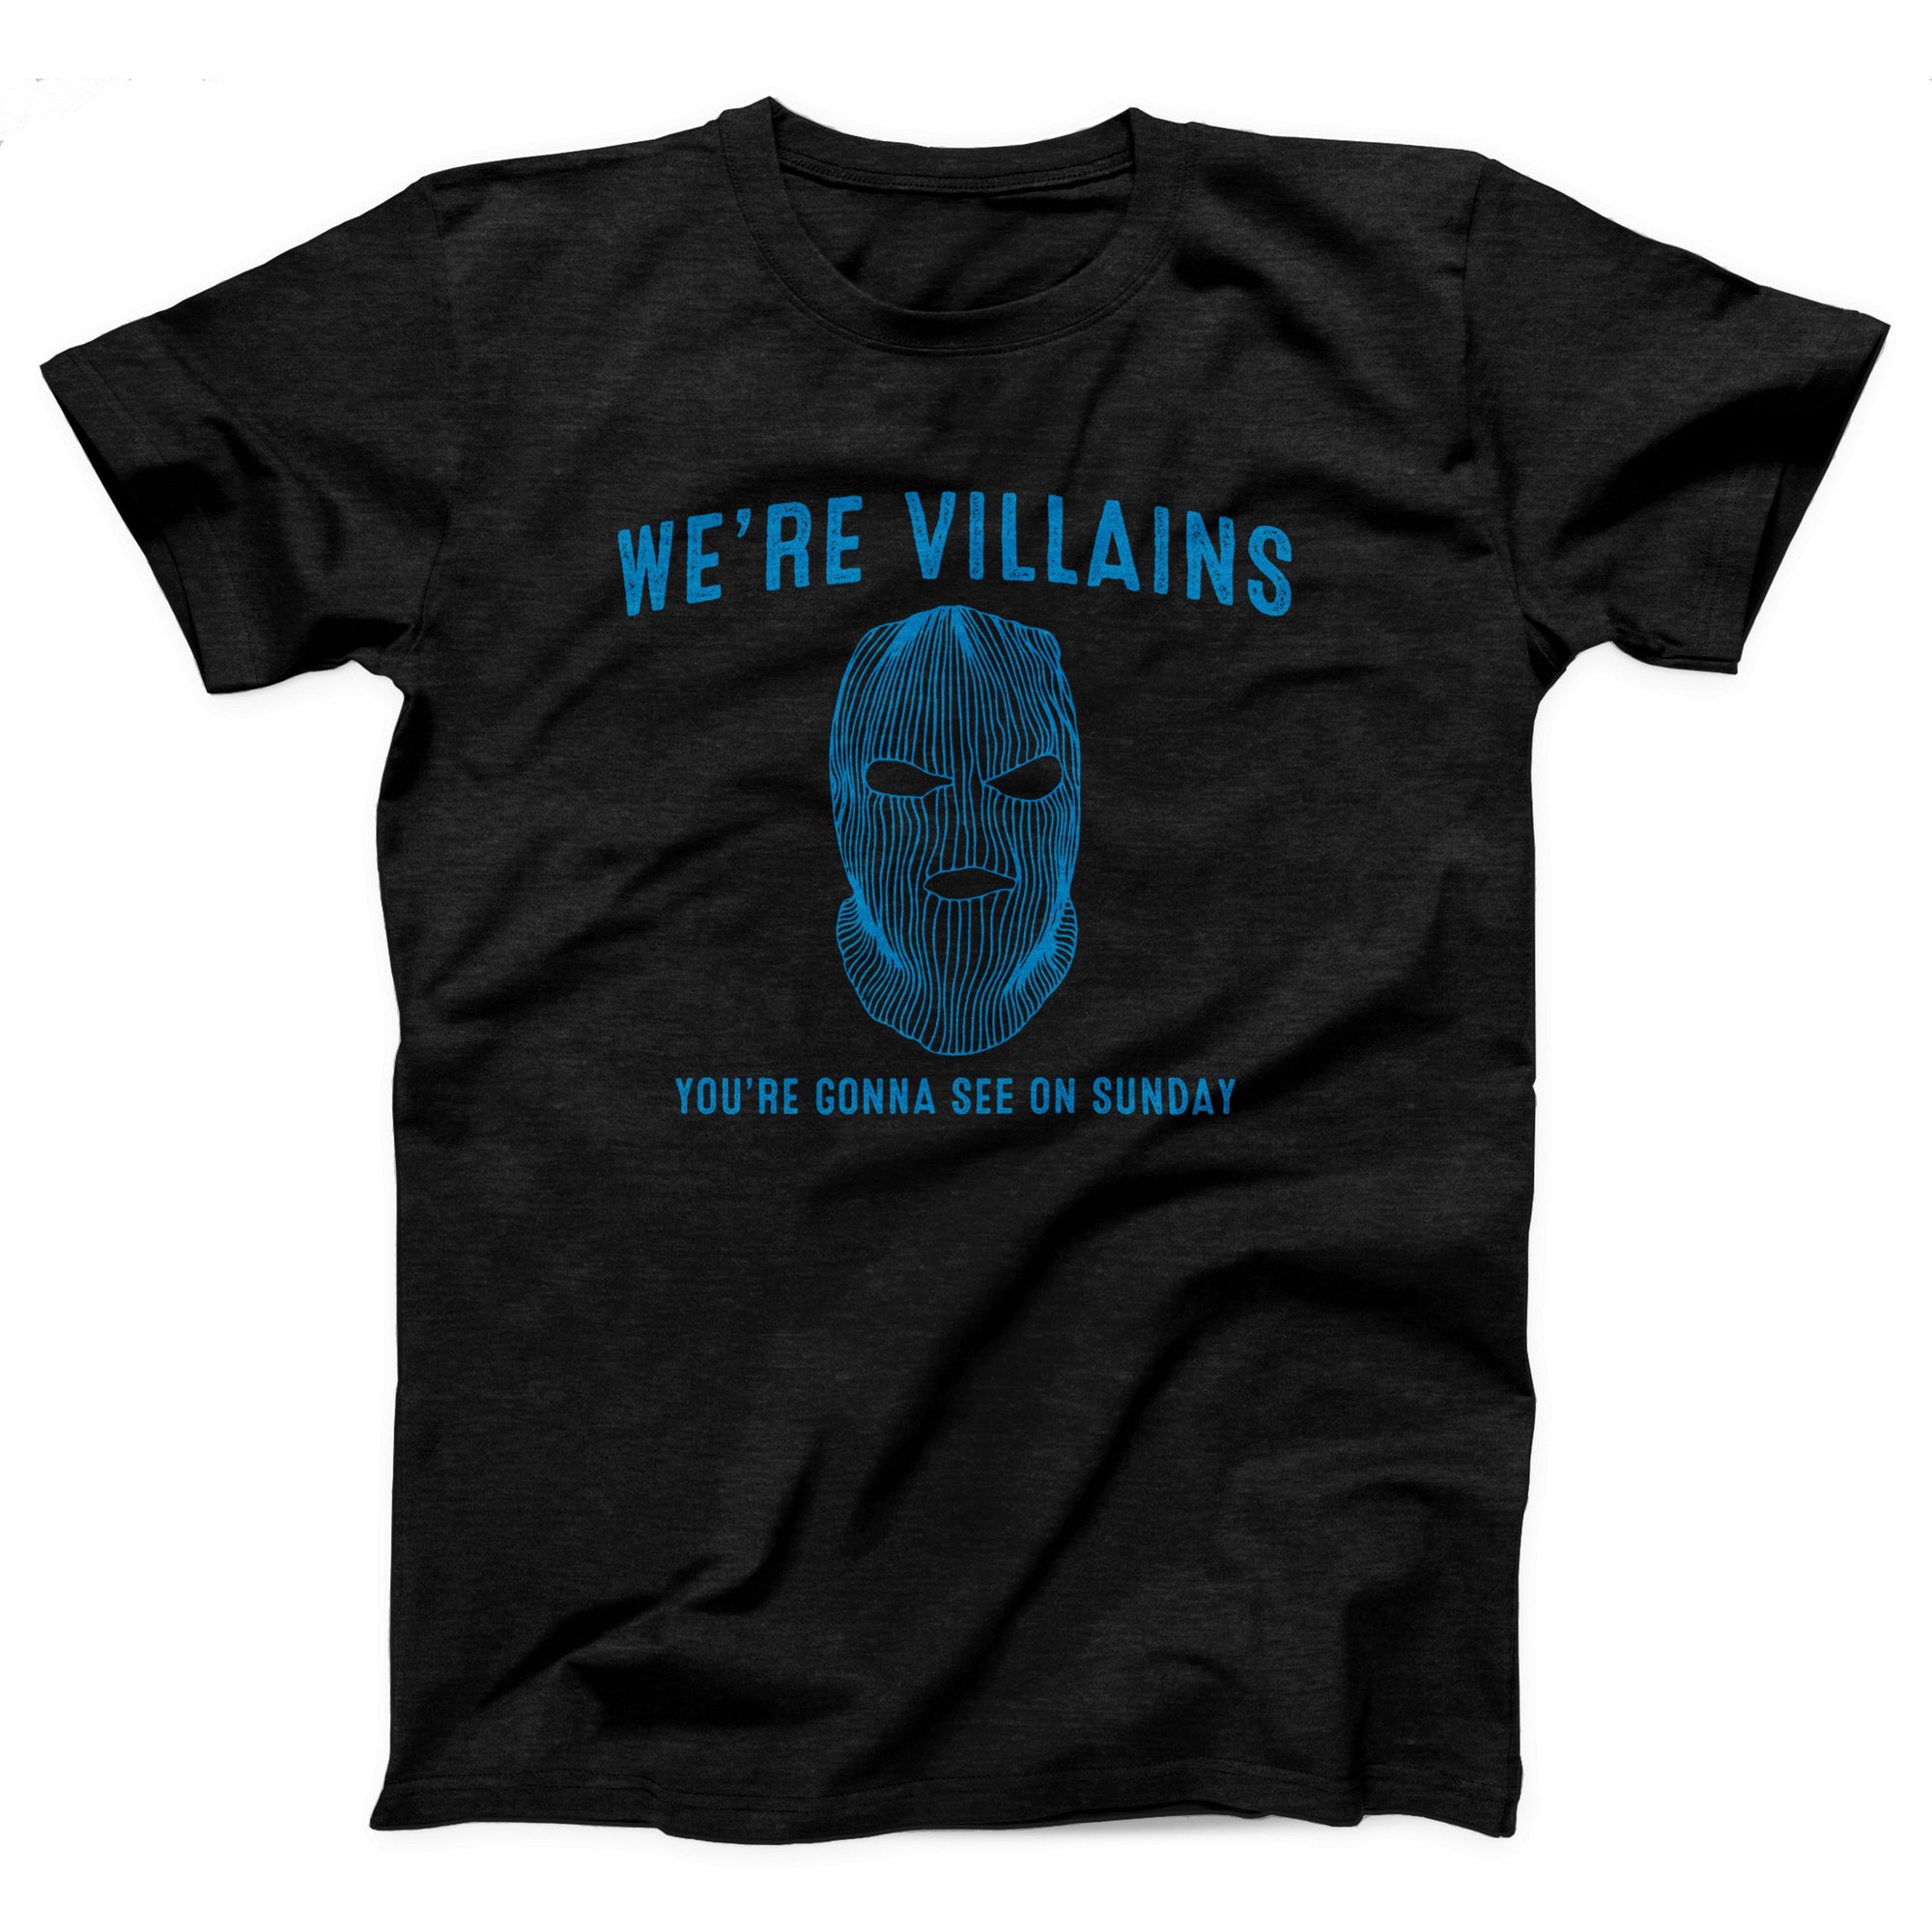 We're Villains Adult Unisex T-Shirt - Twisted Gorilla